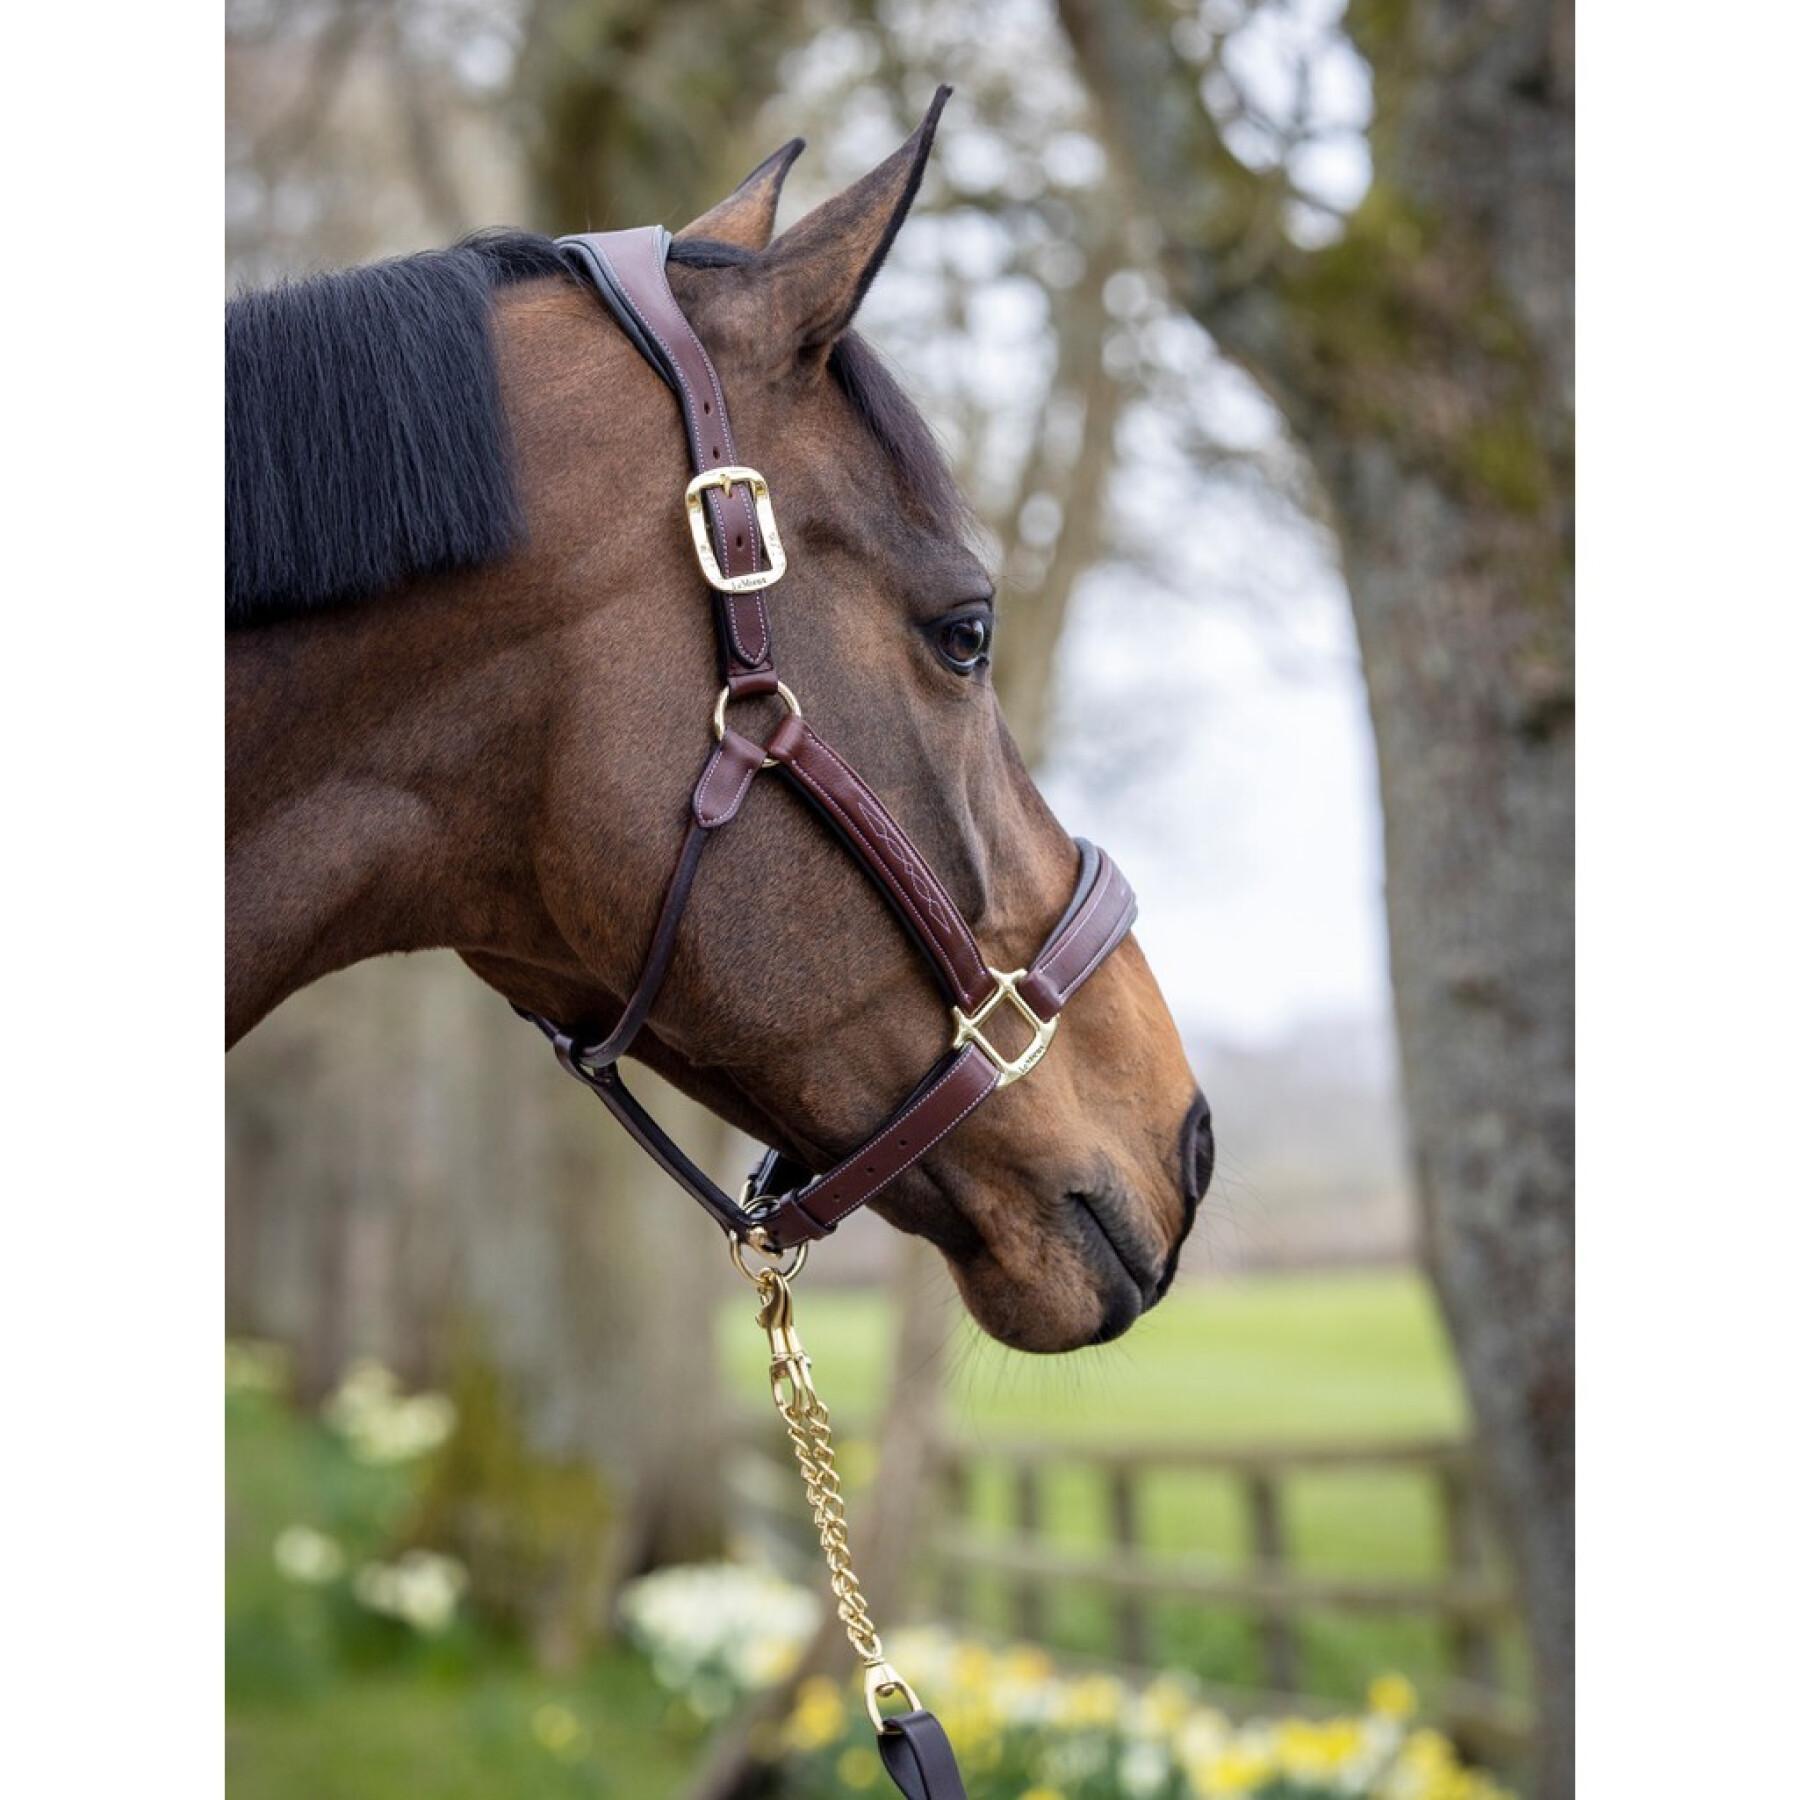 Leather halter for horse LeMieux Stitched Comfort